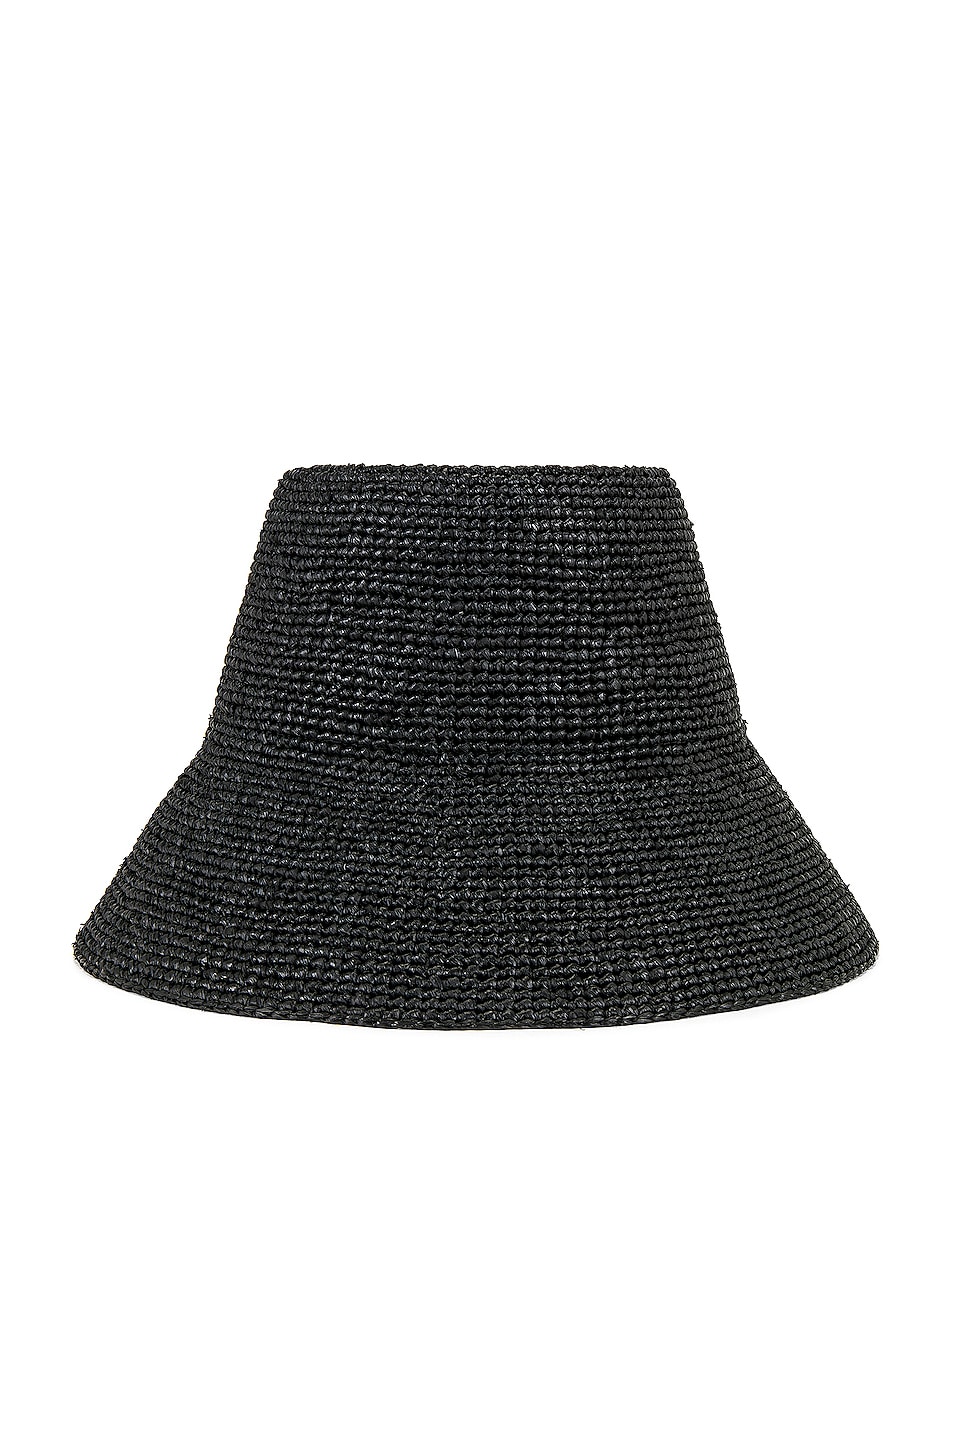 Felix Bucket Hat in Black